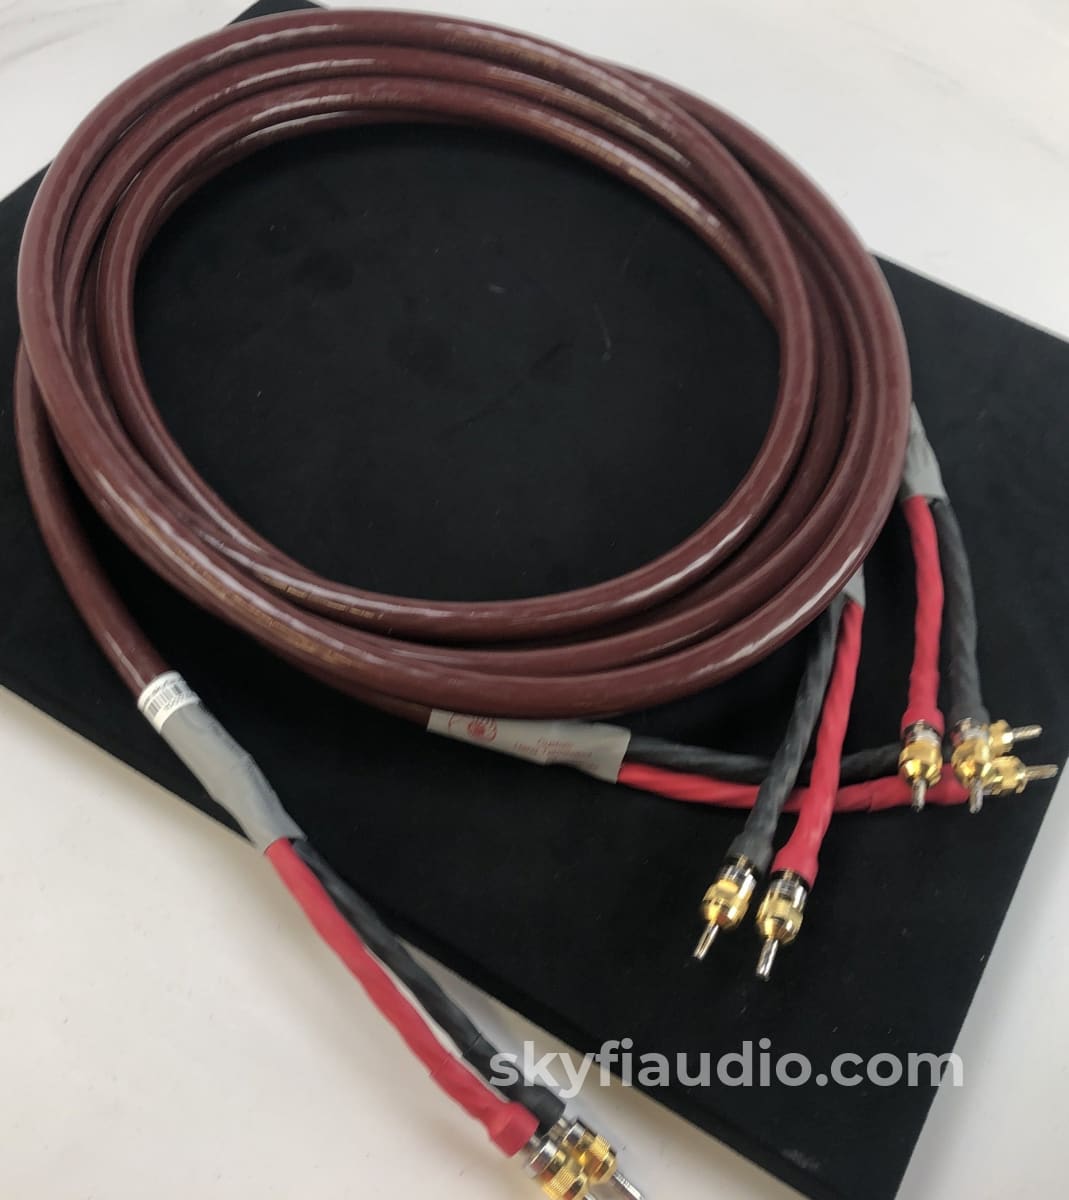 Cardas Golden Cross Speaker Cables - 10